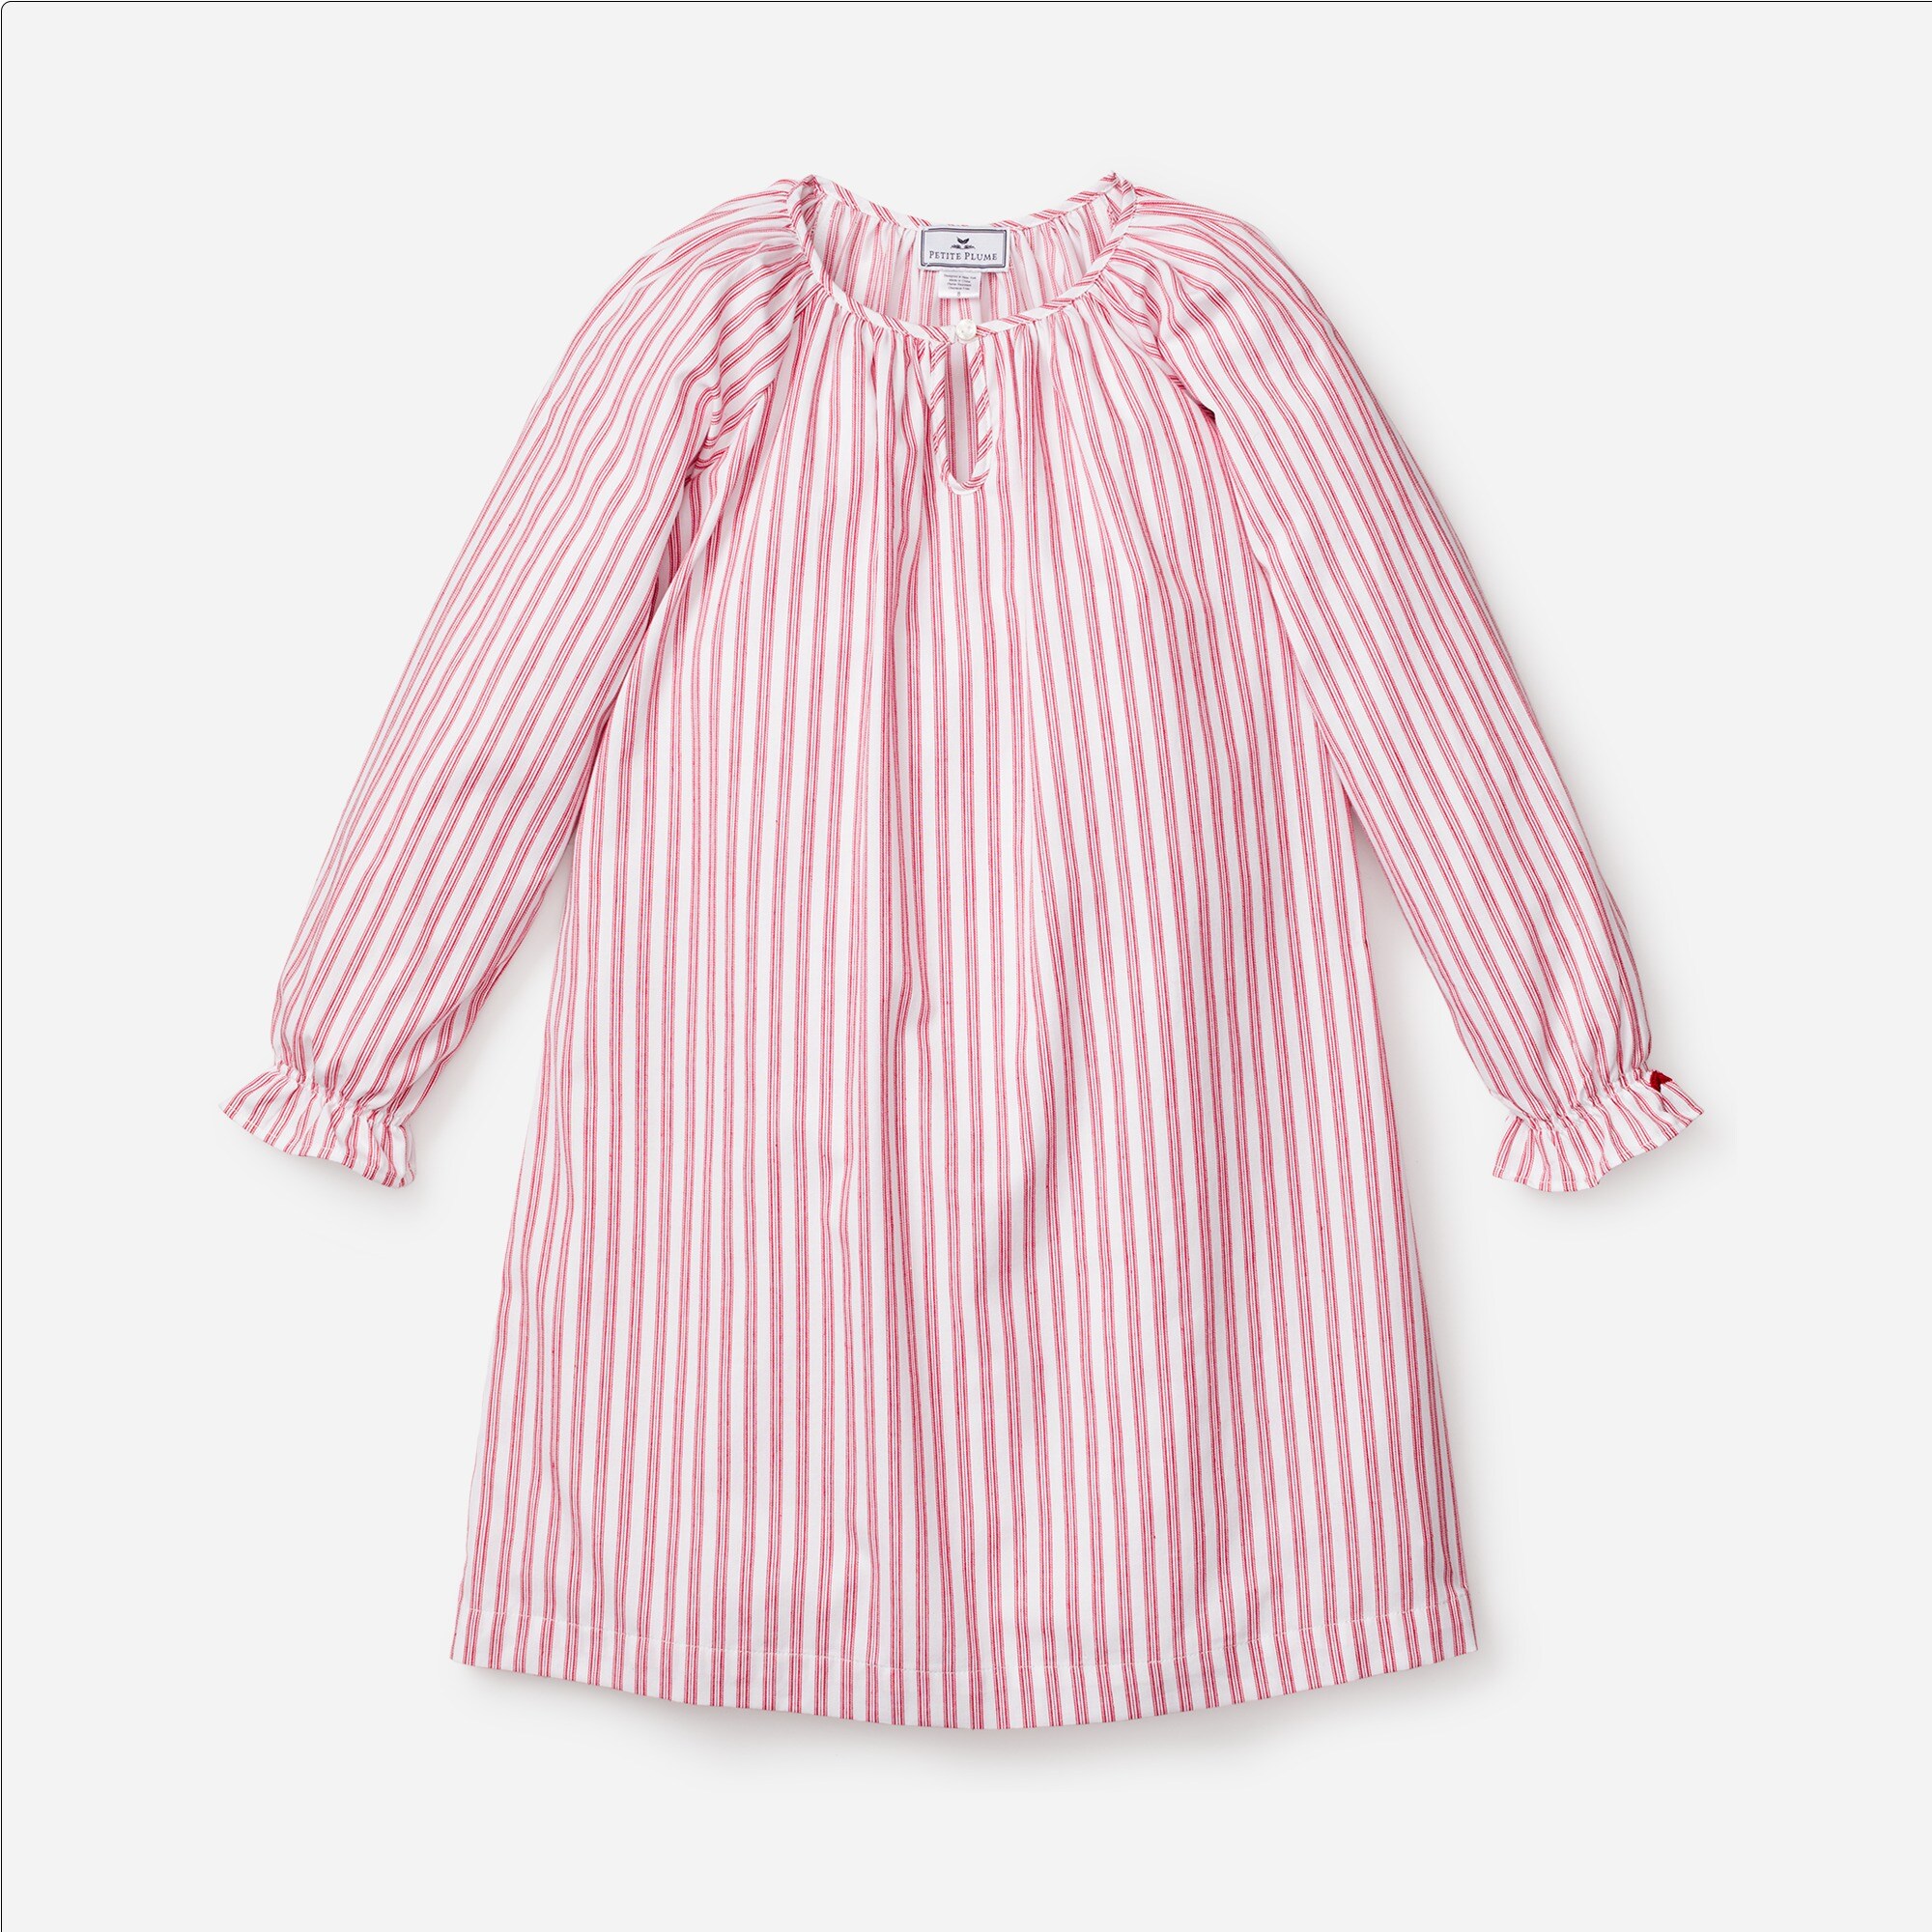  Petite Plume™ girls' Delphine nightgown